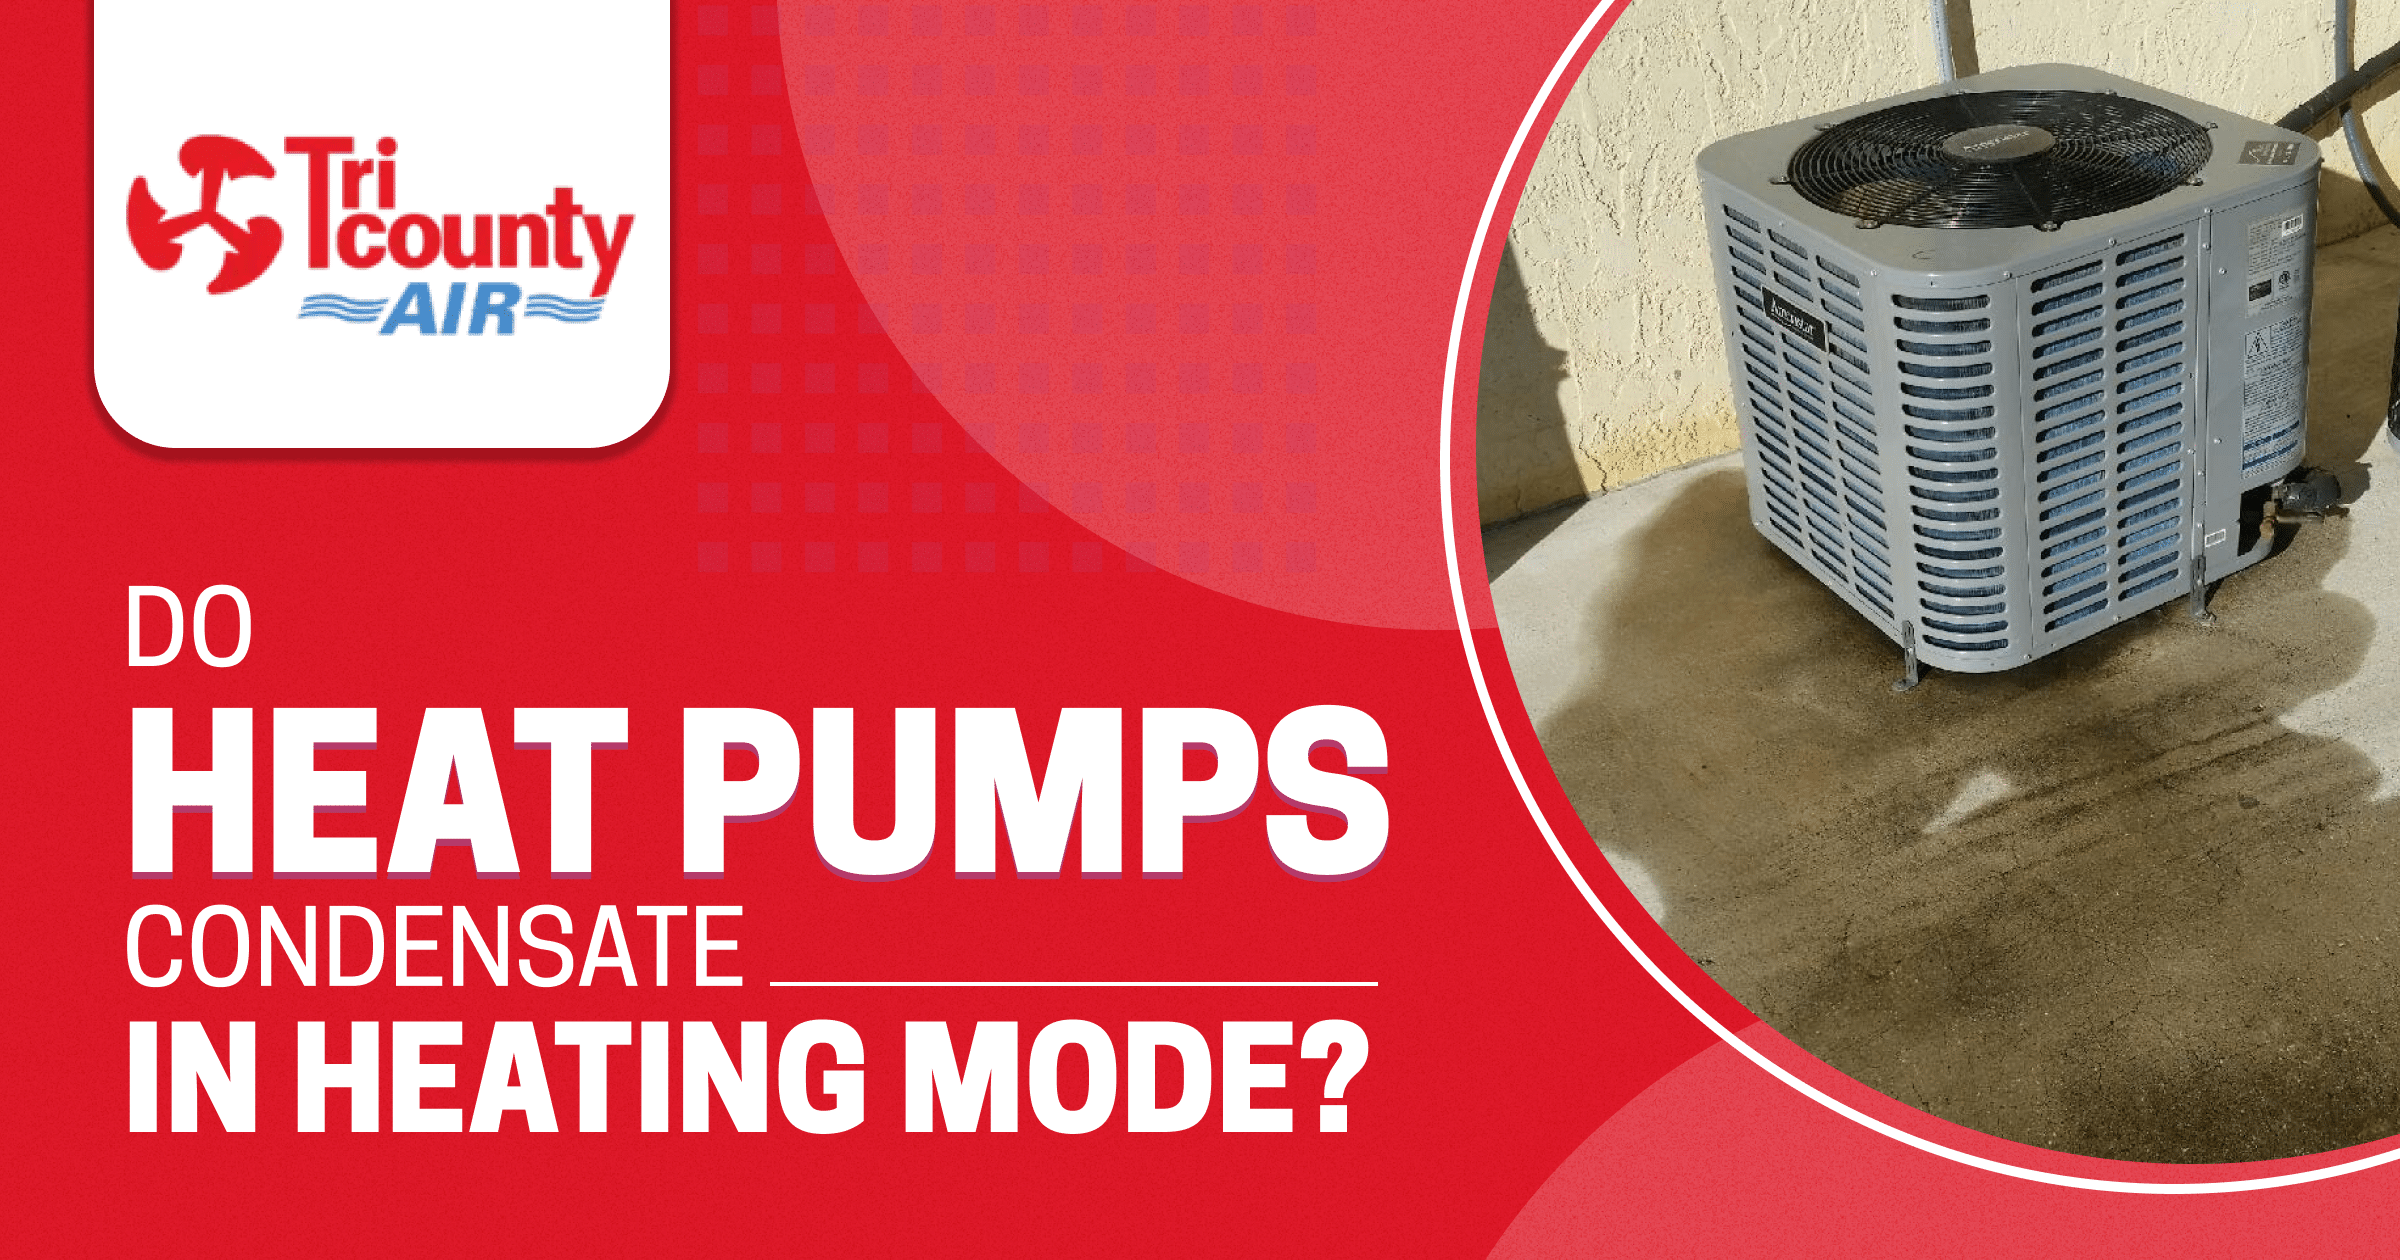 Do Heat Pumps Condensate in Heating Mode?